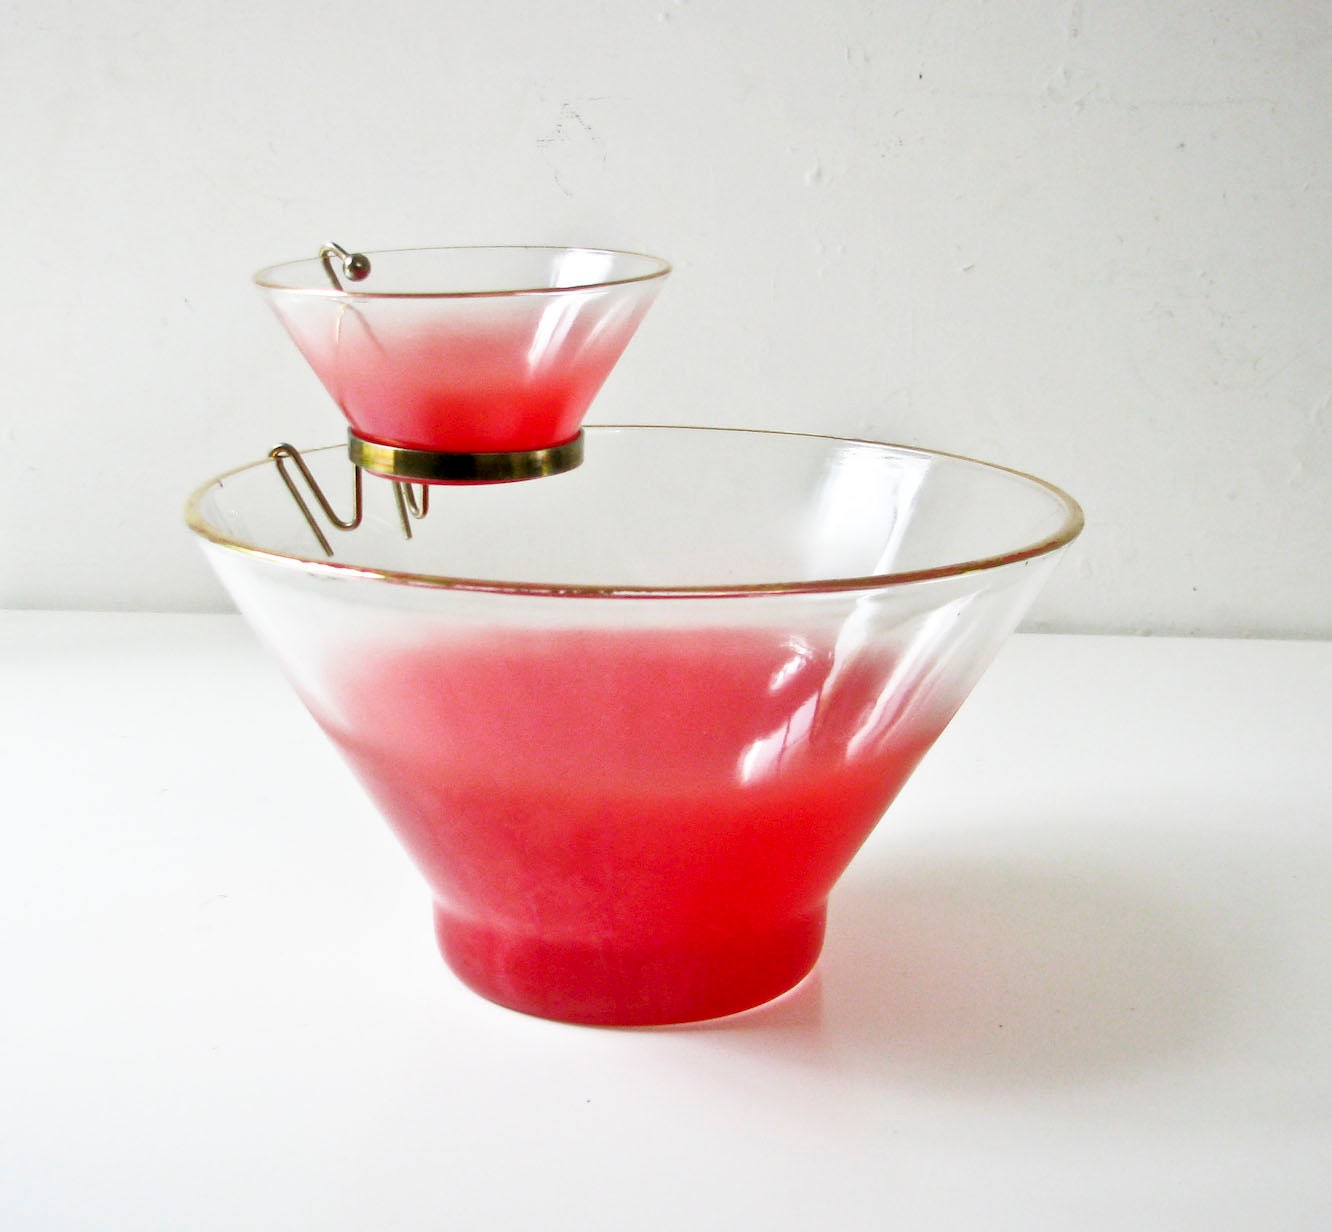 Vintage Chip Dip Bowl - Red Sprayed Design - Atomic Chic - BeeJayKay